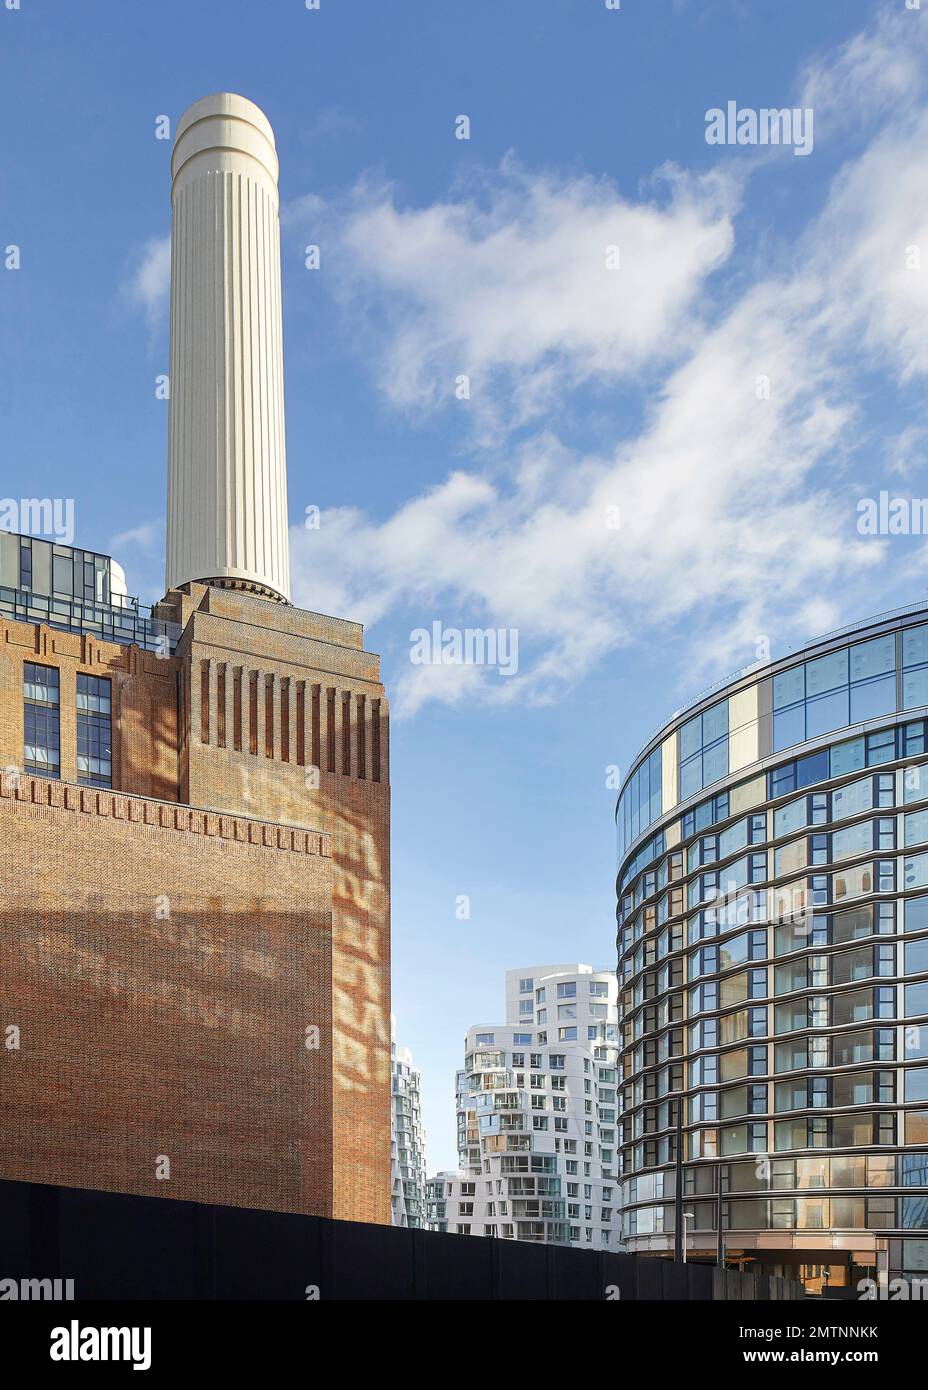 Facciate vecchie e nuove in giustapposizione. Prospect Place Battersea Power Station Frank Gehry, Londra, Regno Unito. Architetto: Frank Gehry, 2022. Foto Stock